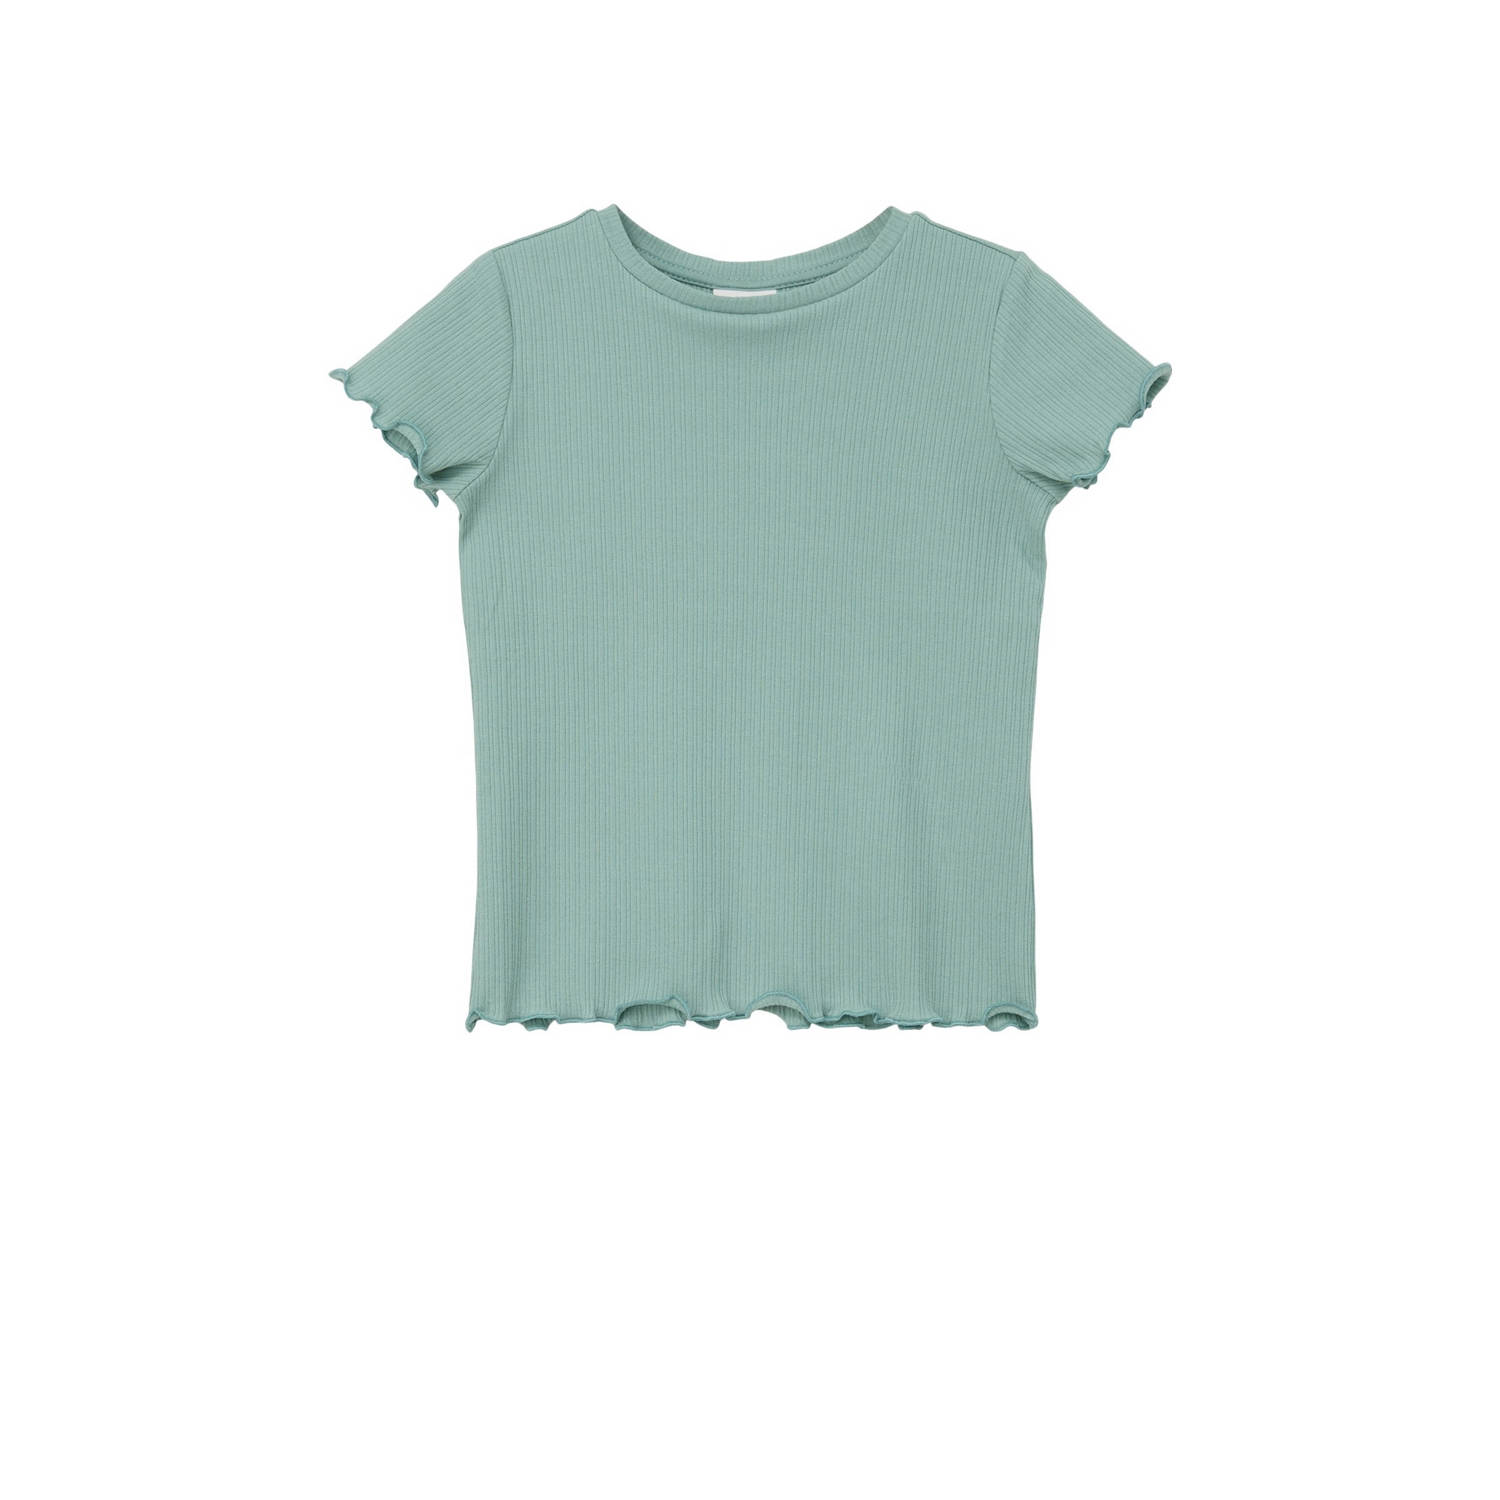 s.Oliver T-shirt groen